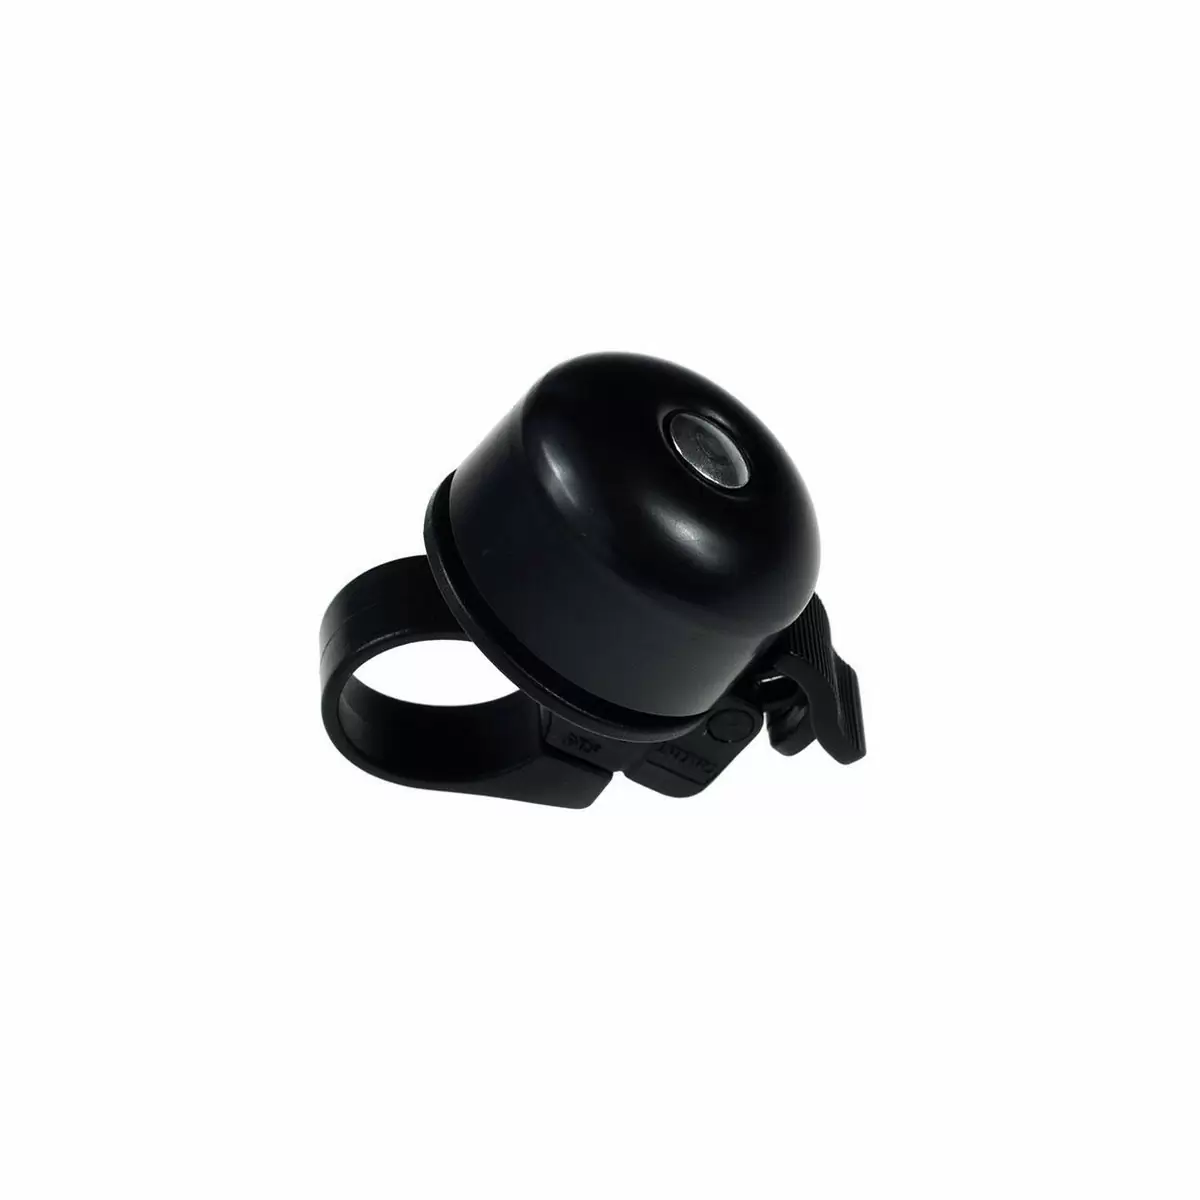 Alloy clamp mini bell black - image